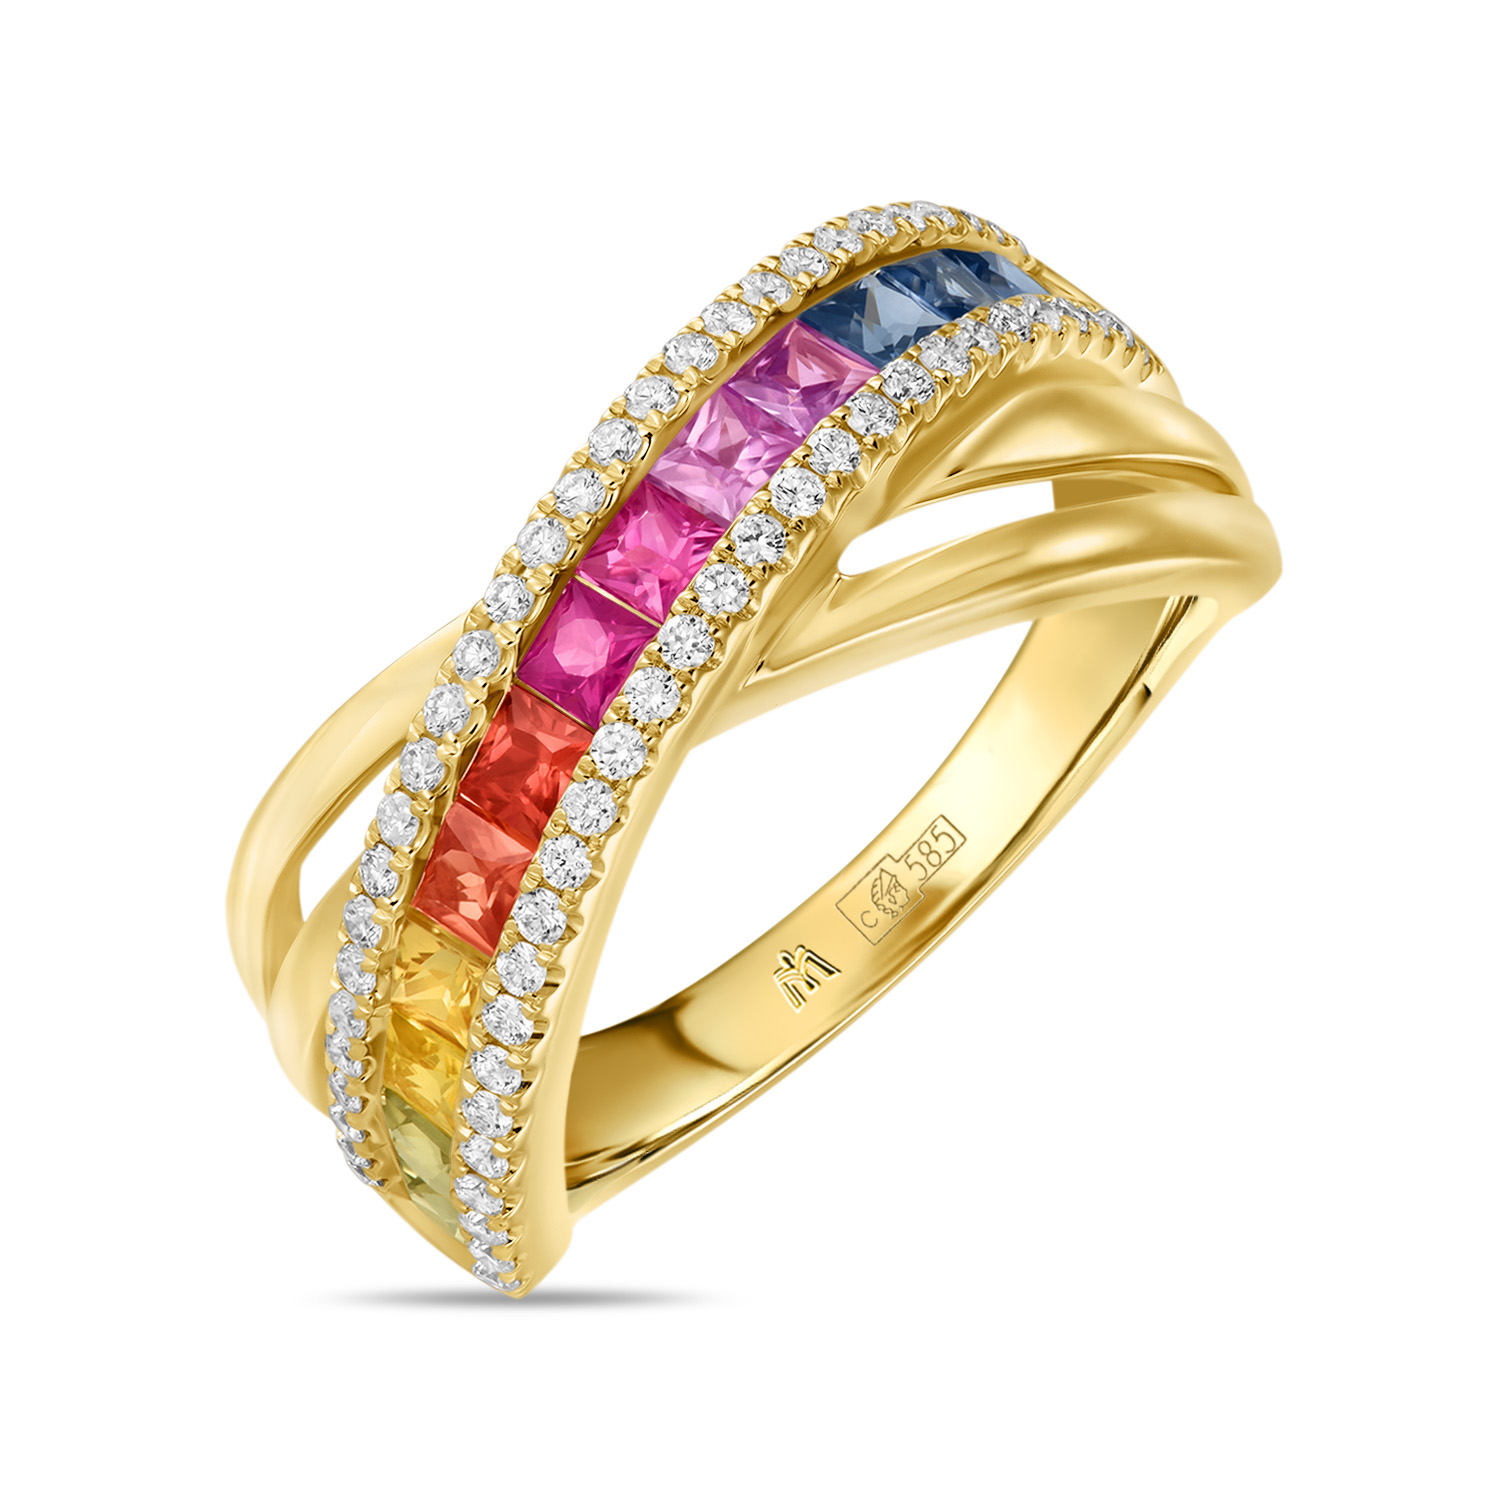 Кольца МЮЗ Кольцо с бриллиантами, сапфирами и цветными сапфирами кольца мюз кольцо с бриллиантами и цветными сапфирами